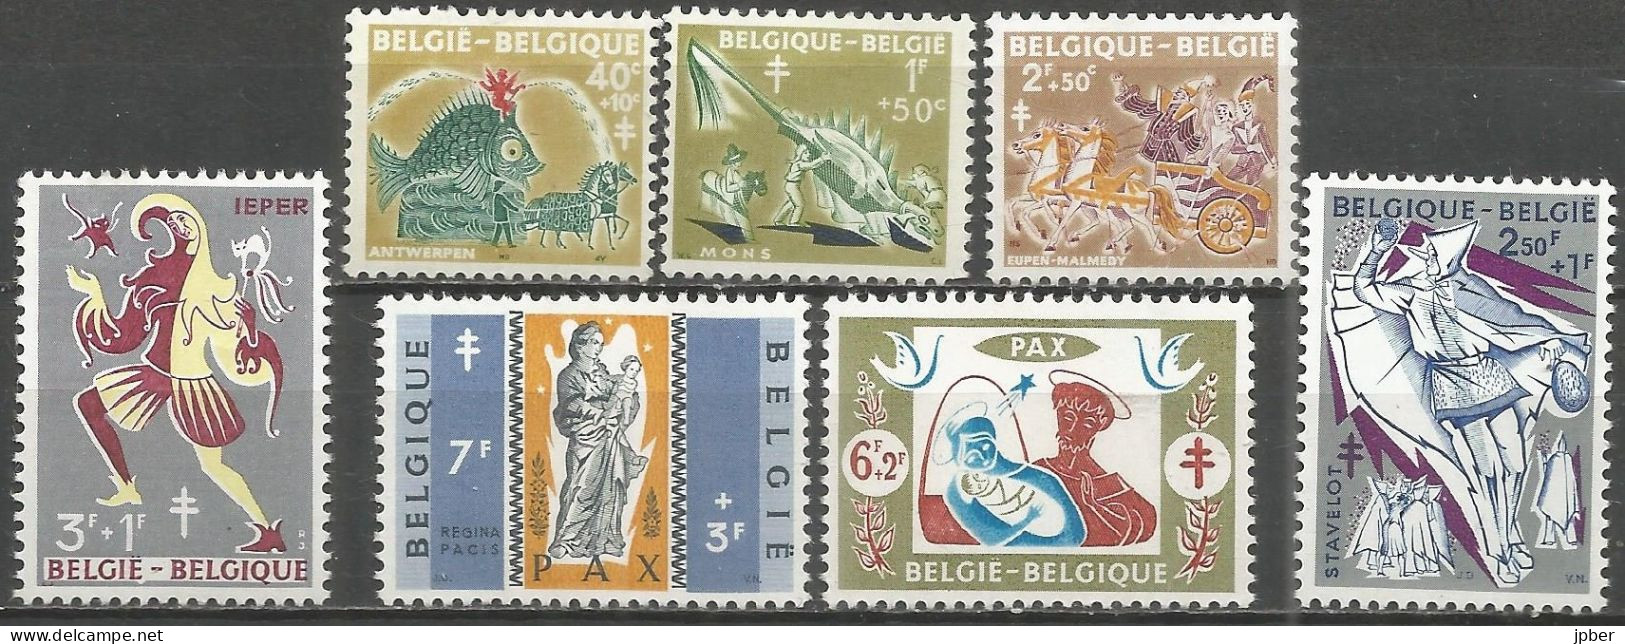 Belgique - Folklore - Anvers, Mons, Eupen, Stavelot, Ypres - N°1114 à 1120 */** - Nuovi